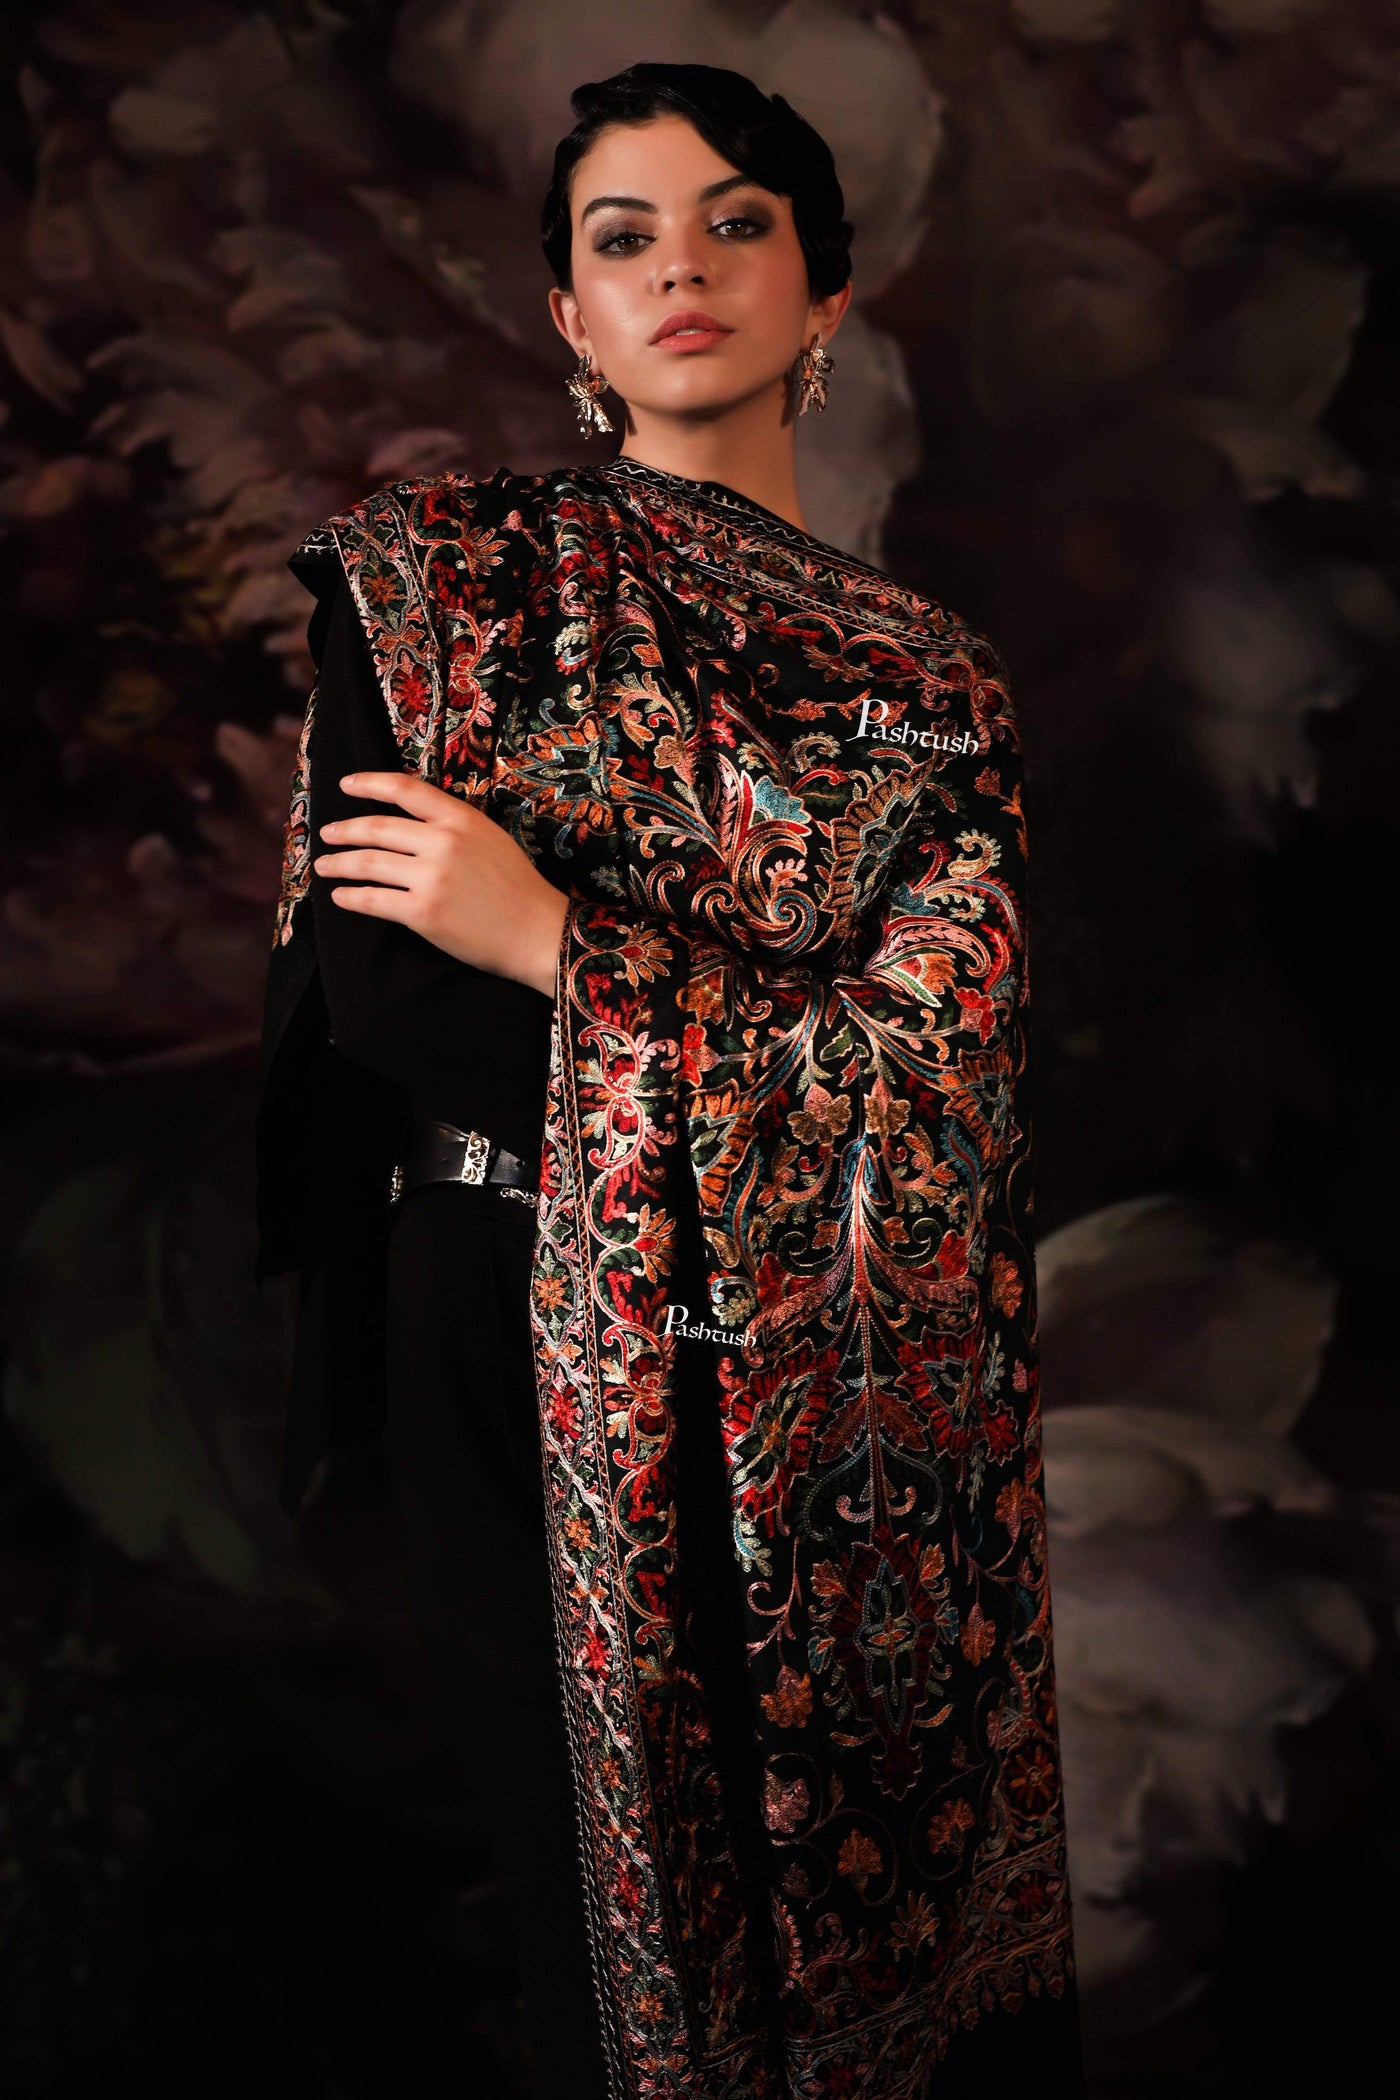 Pashtush India 70x200 Pashtush Tres Chic Regal Collection, Wool Embroidery Nalki Shawl Scarf, Rich Black